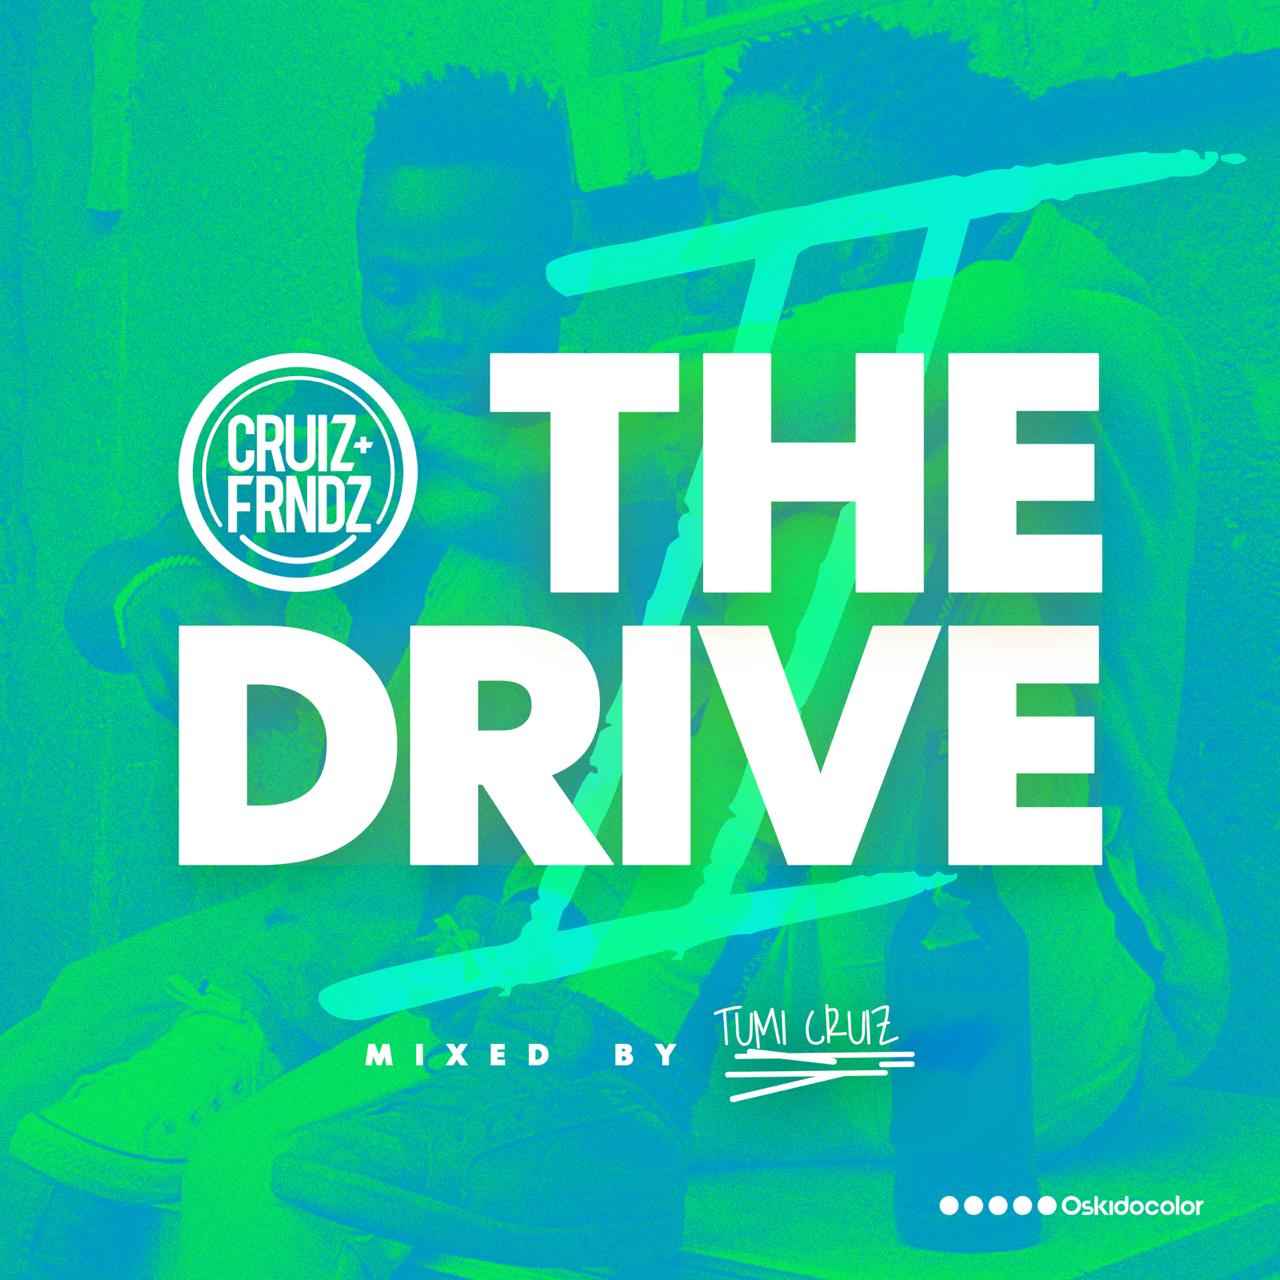 Tumi Cruiz  The Drive Mix 2 